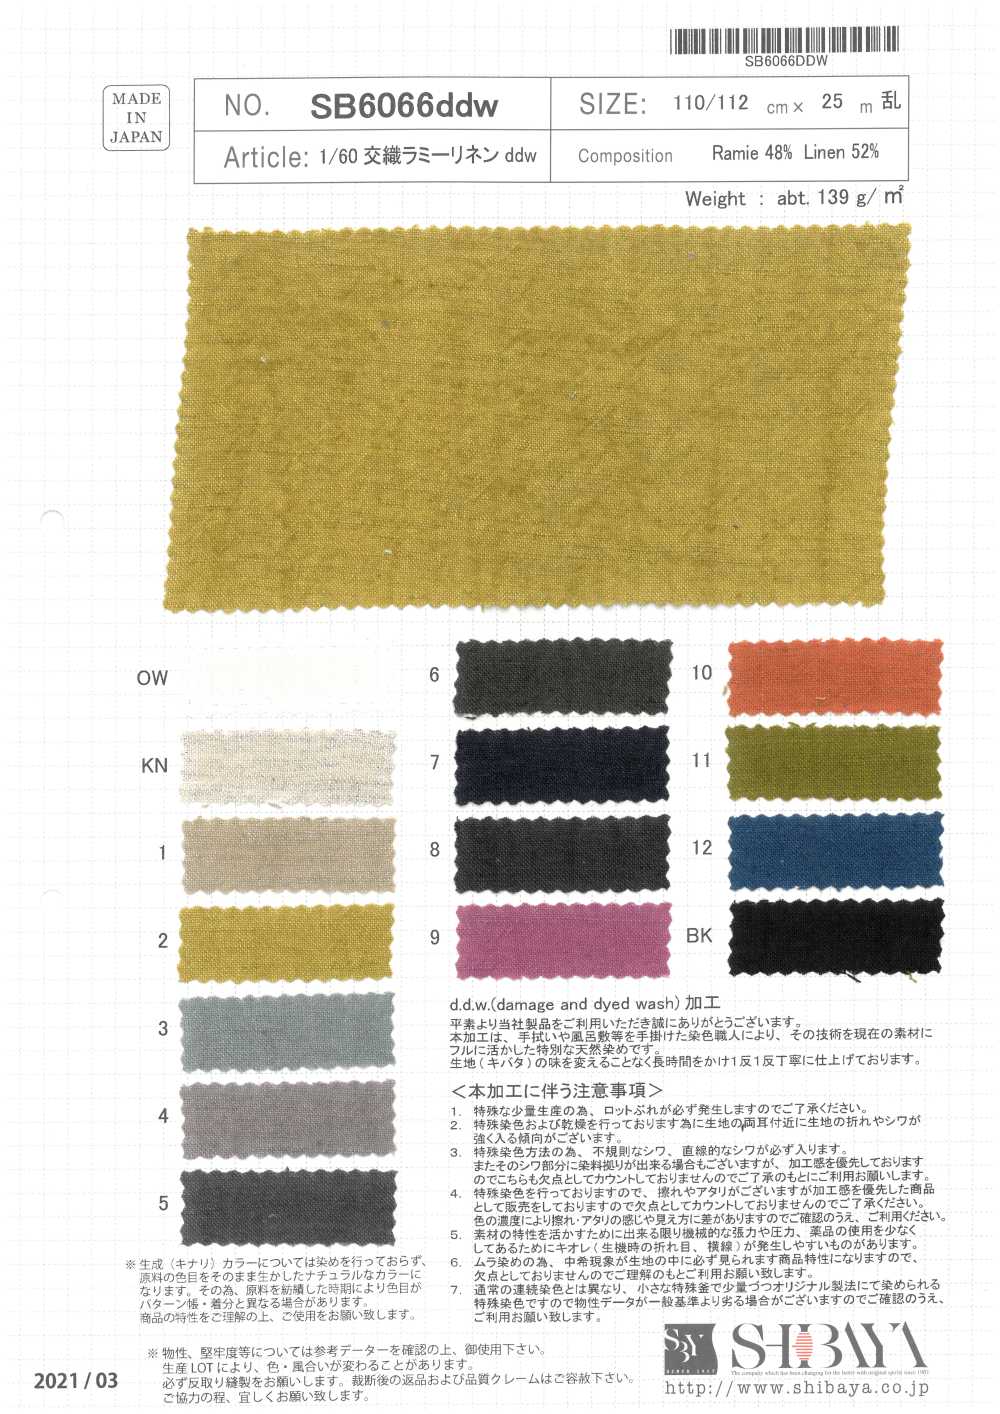 SB6066ddw 1/60 Tejido Mixto Ramio Lino Ddw[Fabrica Textil] SHIBAYA